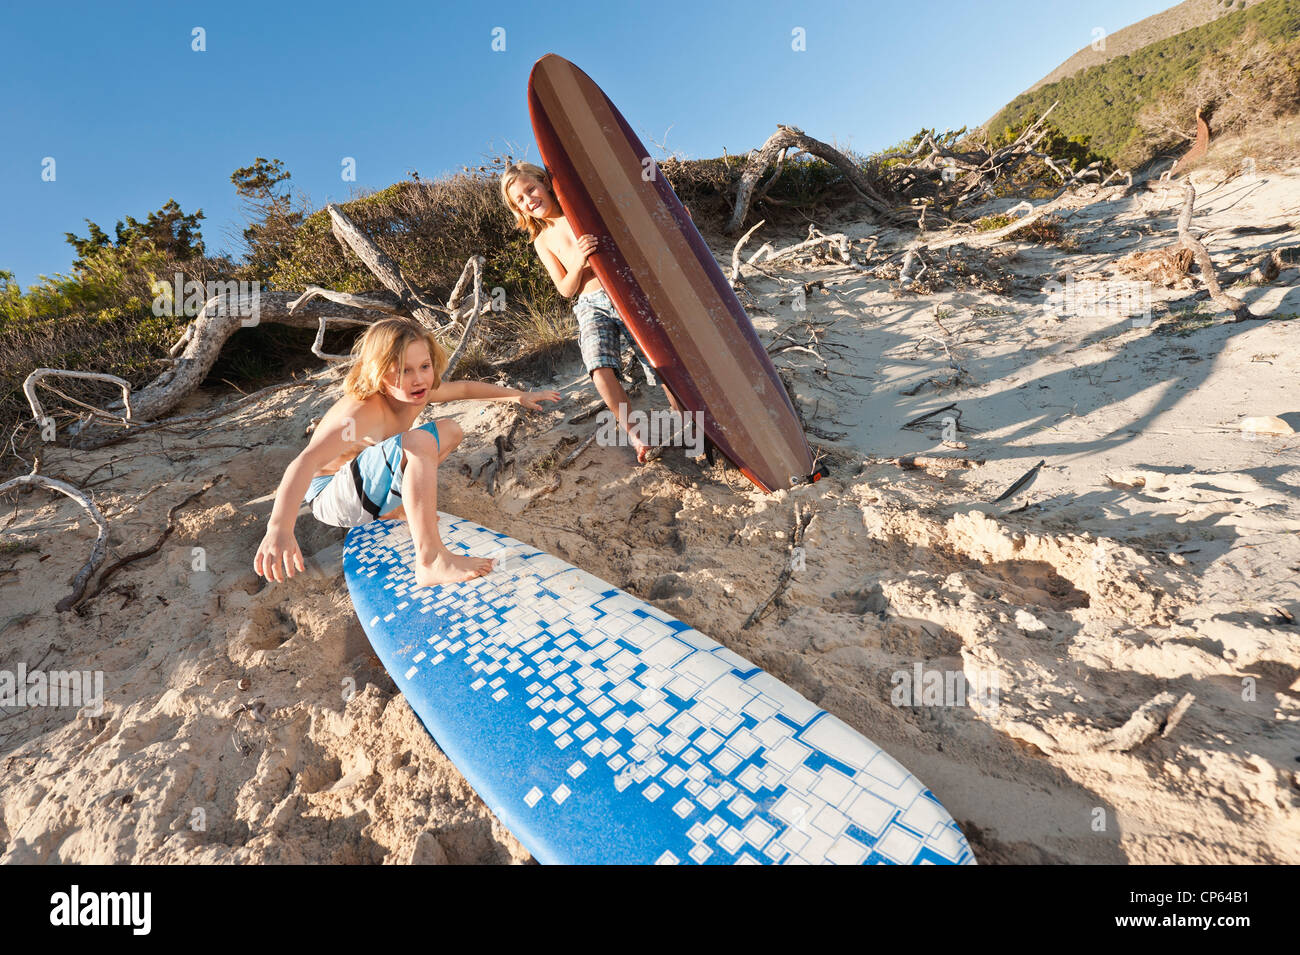 Spain, Mallorca, Children with surfboard on beach Stock Photo